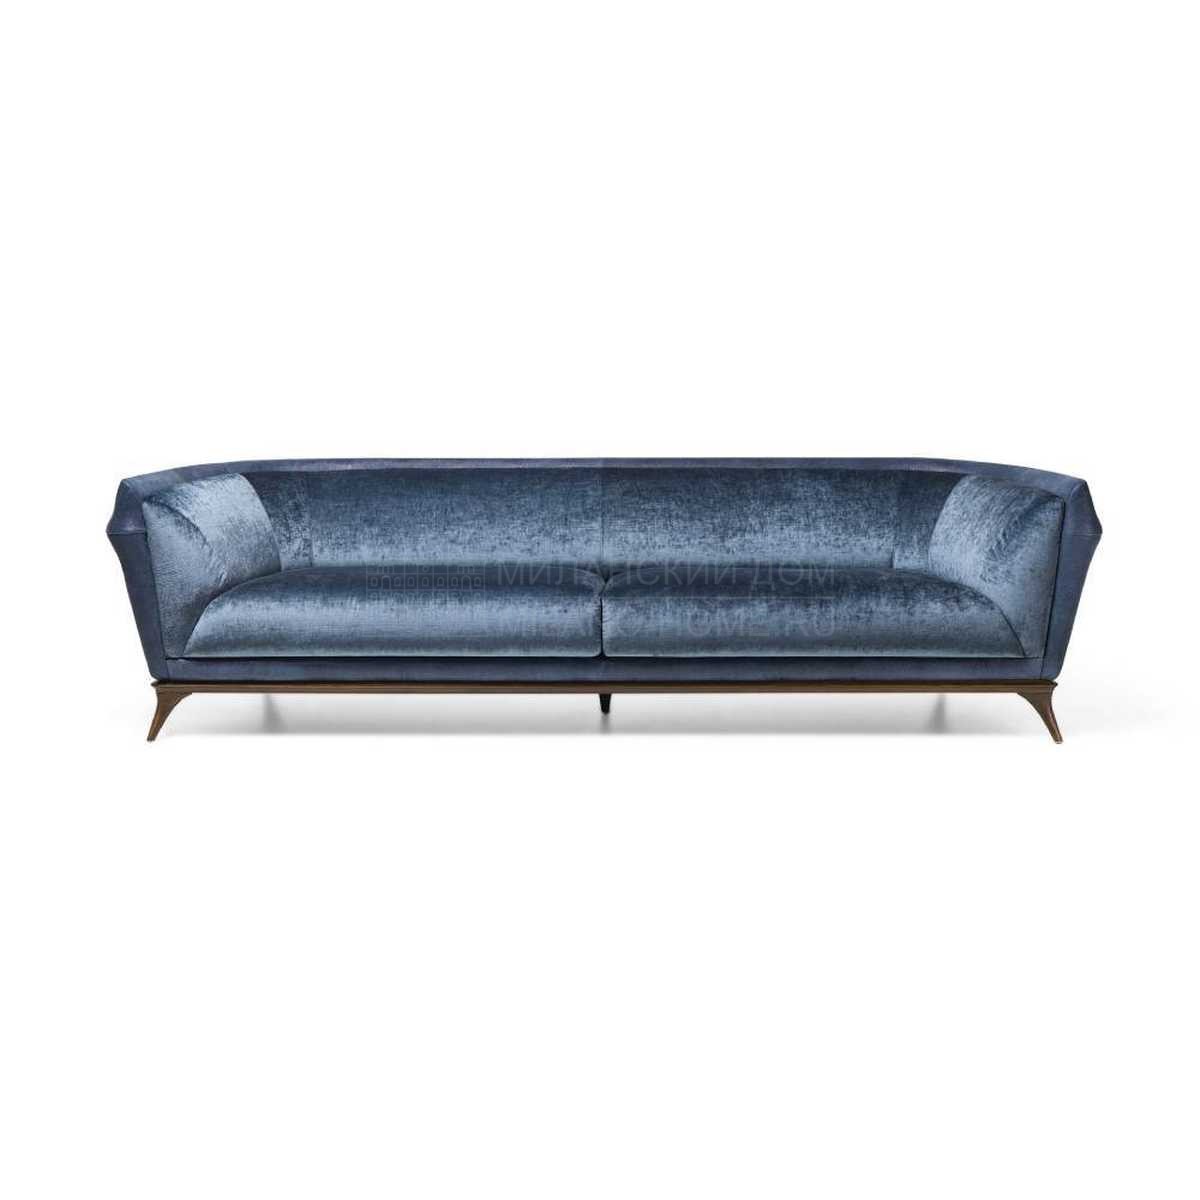 Прямой диван Deimos sofa из Италии фабрики IPE CAVALLI VISIONNAIRE